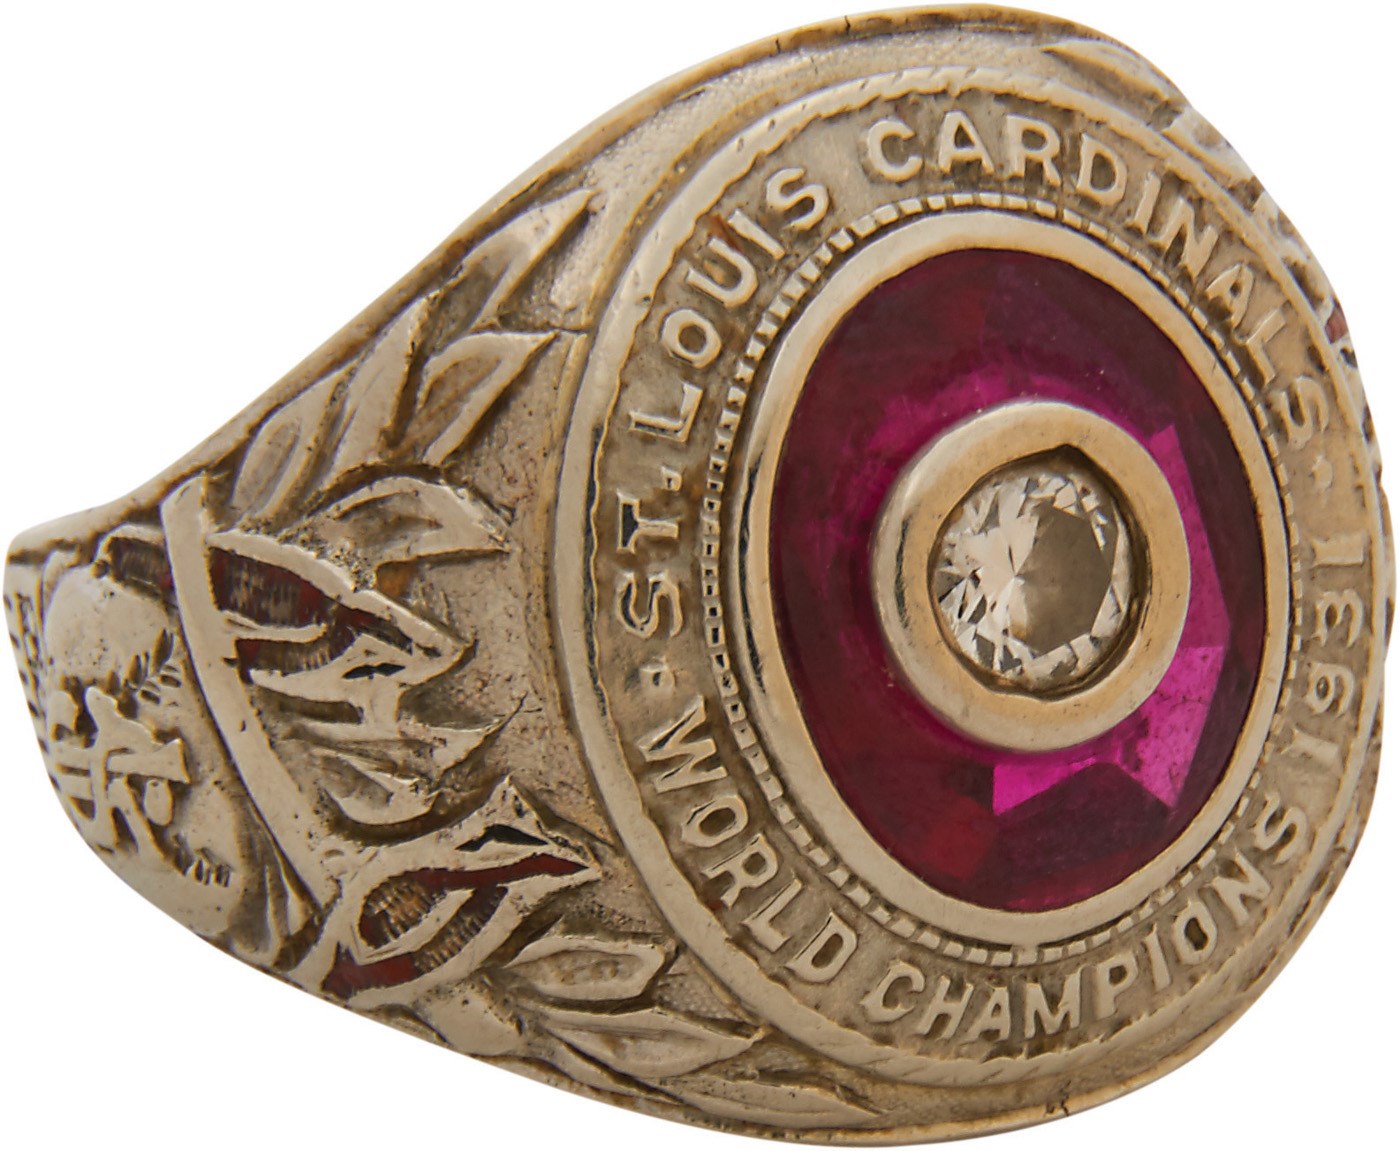 St. Louis Cardinals - 1931 St. Louis Cardinals World Series Championship Ring